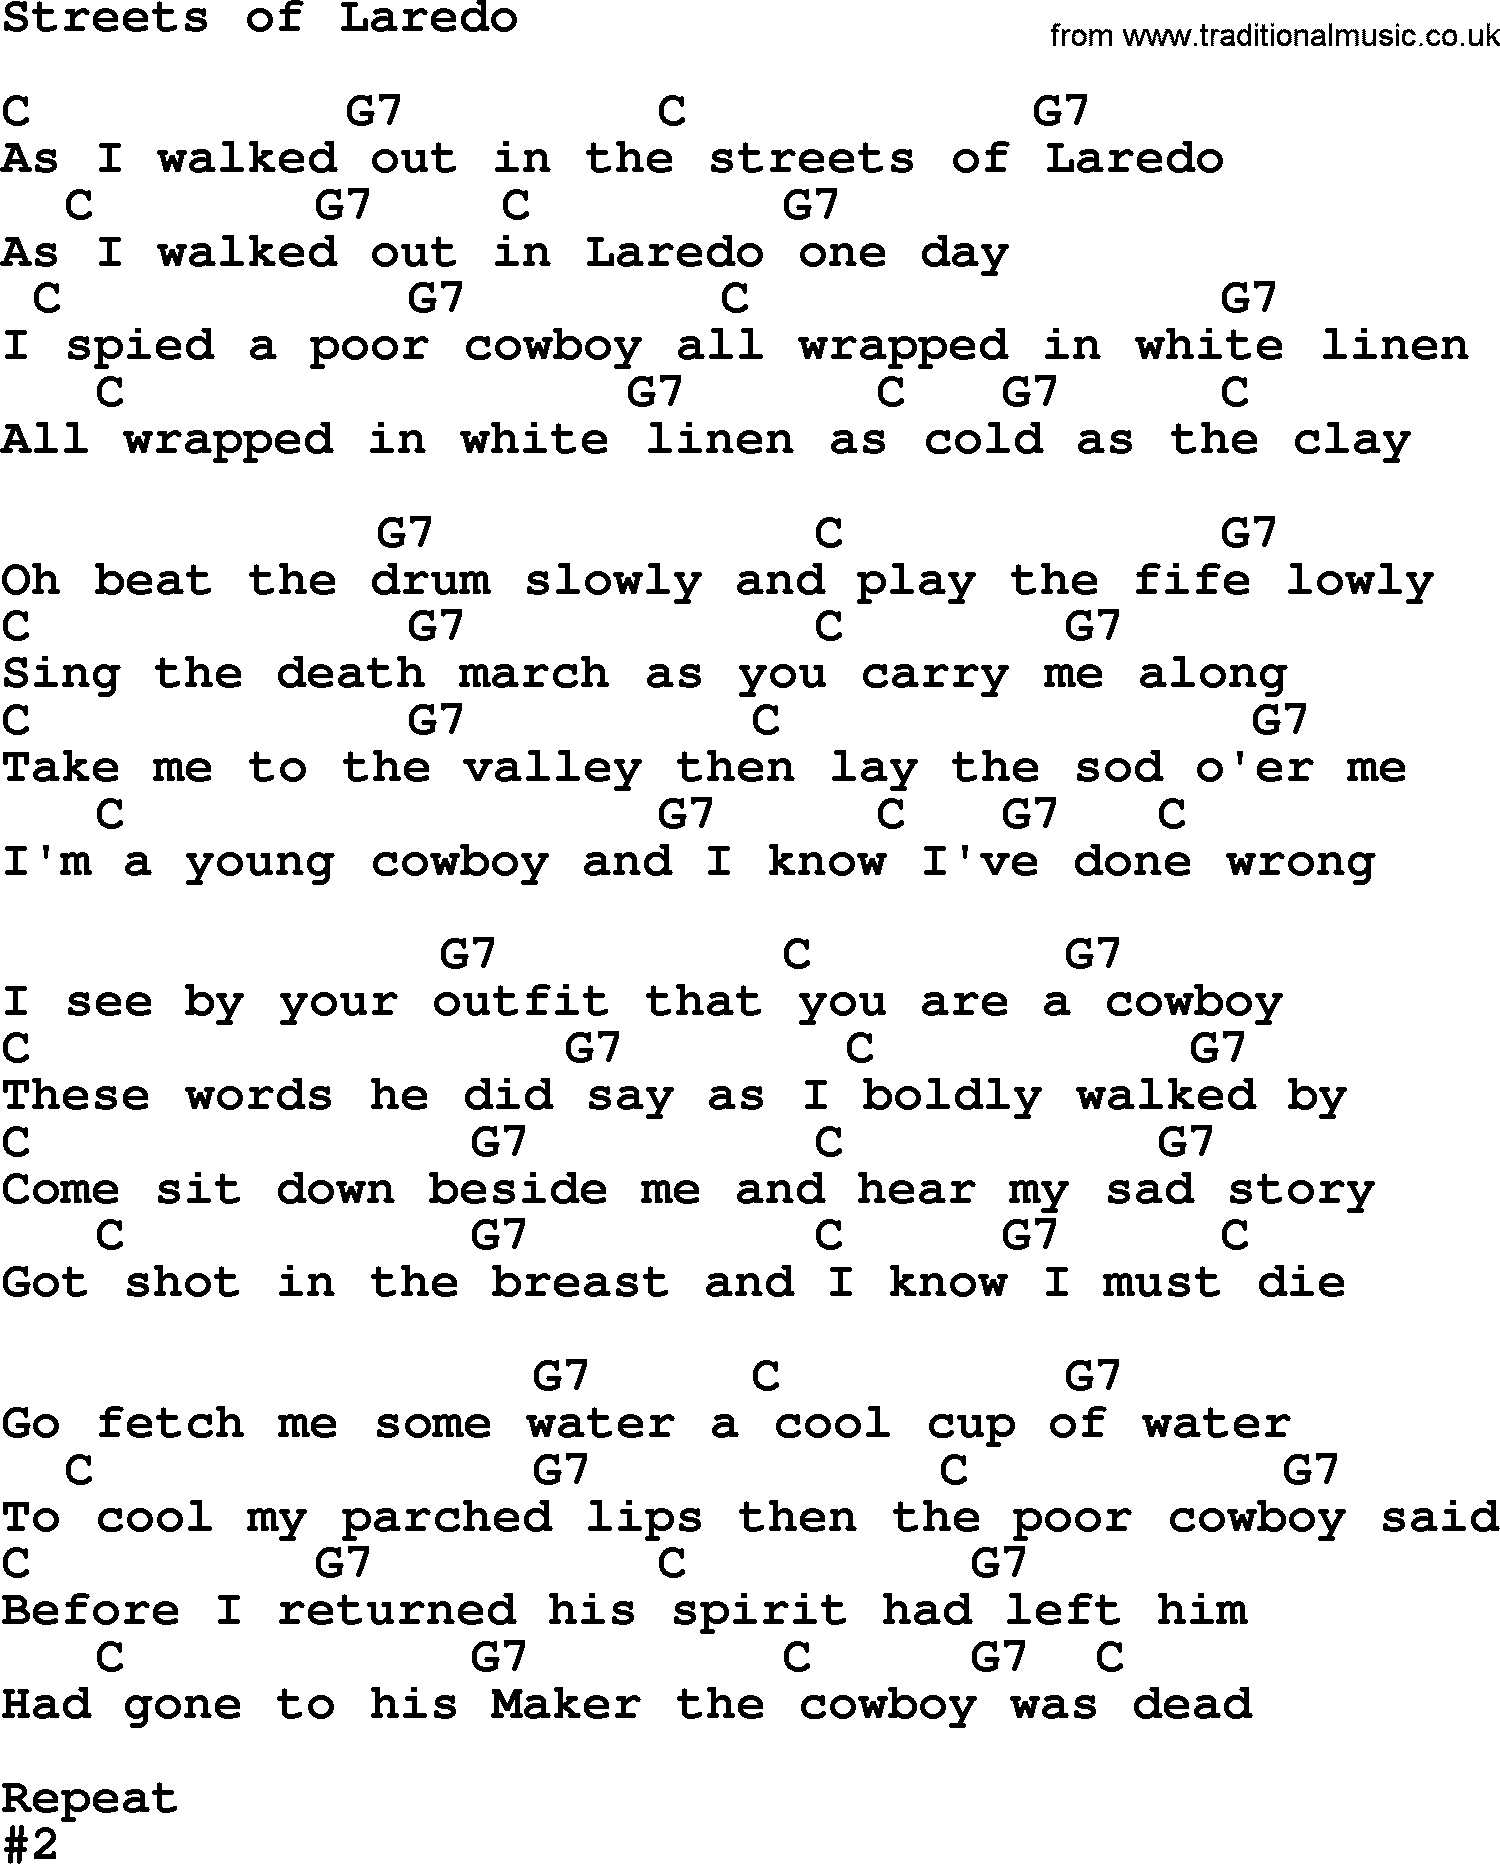 Marty Robbins song: Streets of Laredo, lyrics and chords